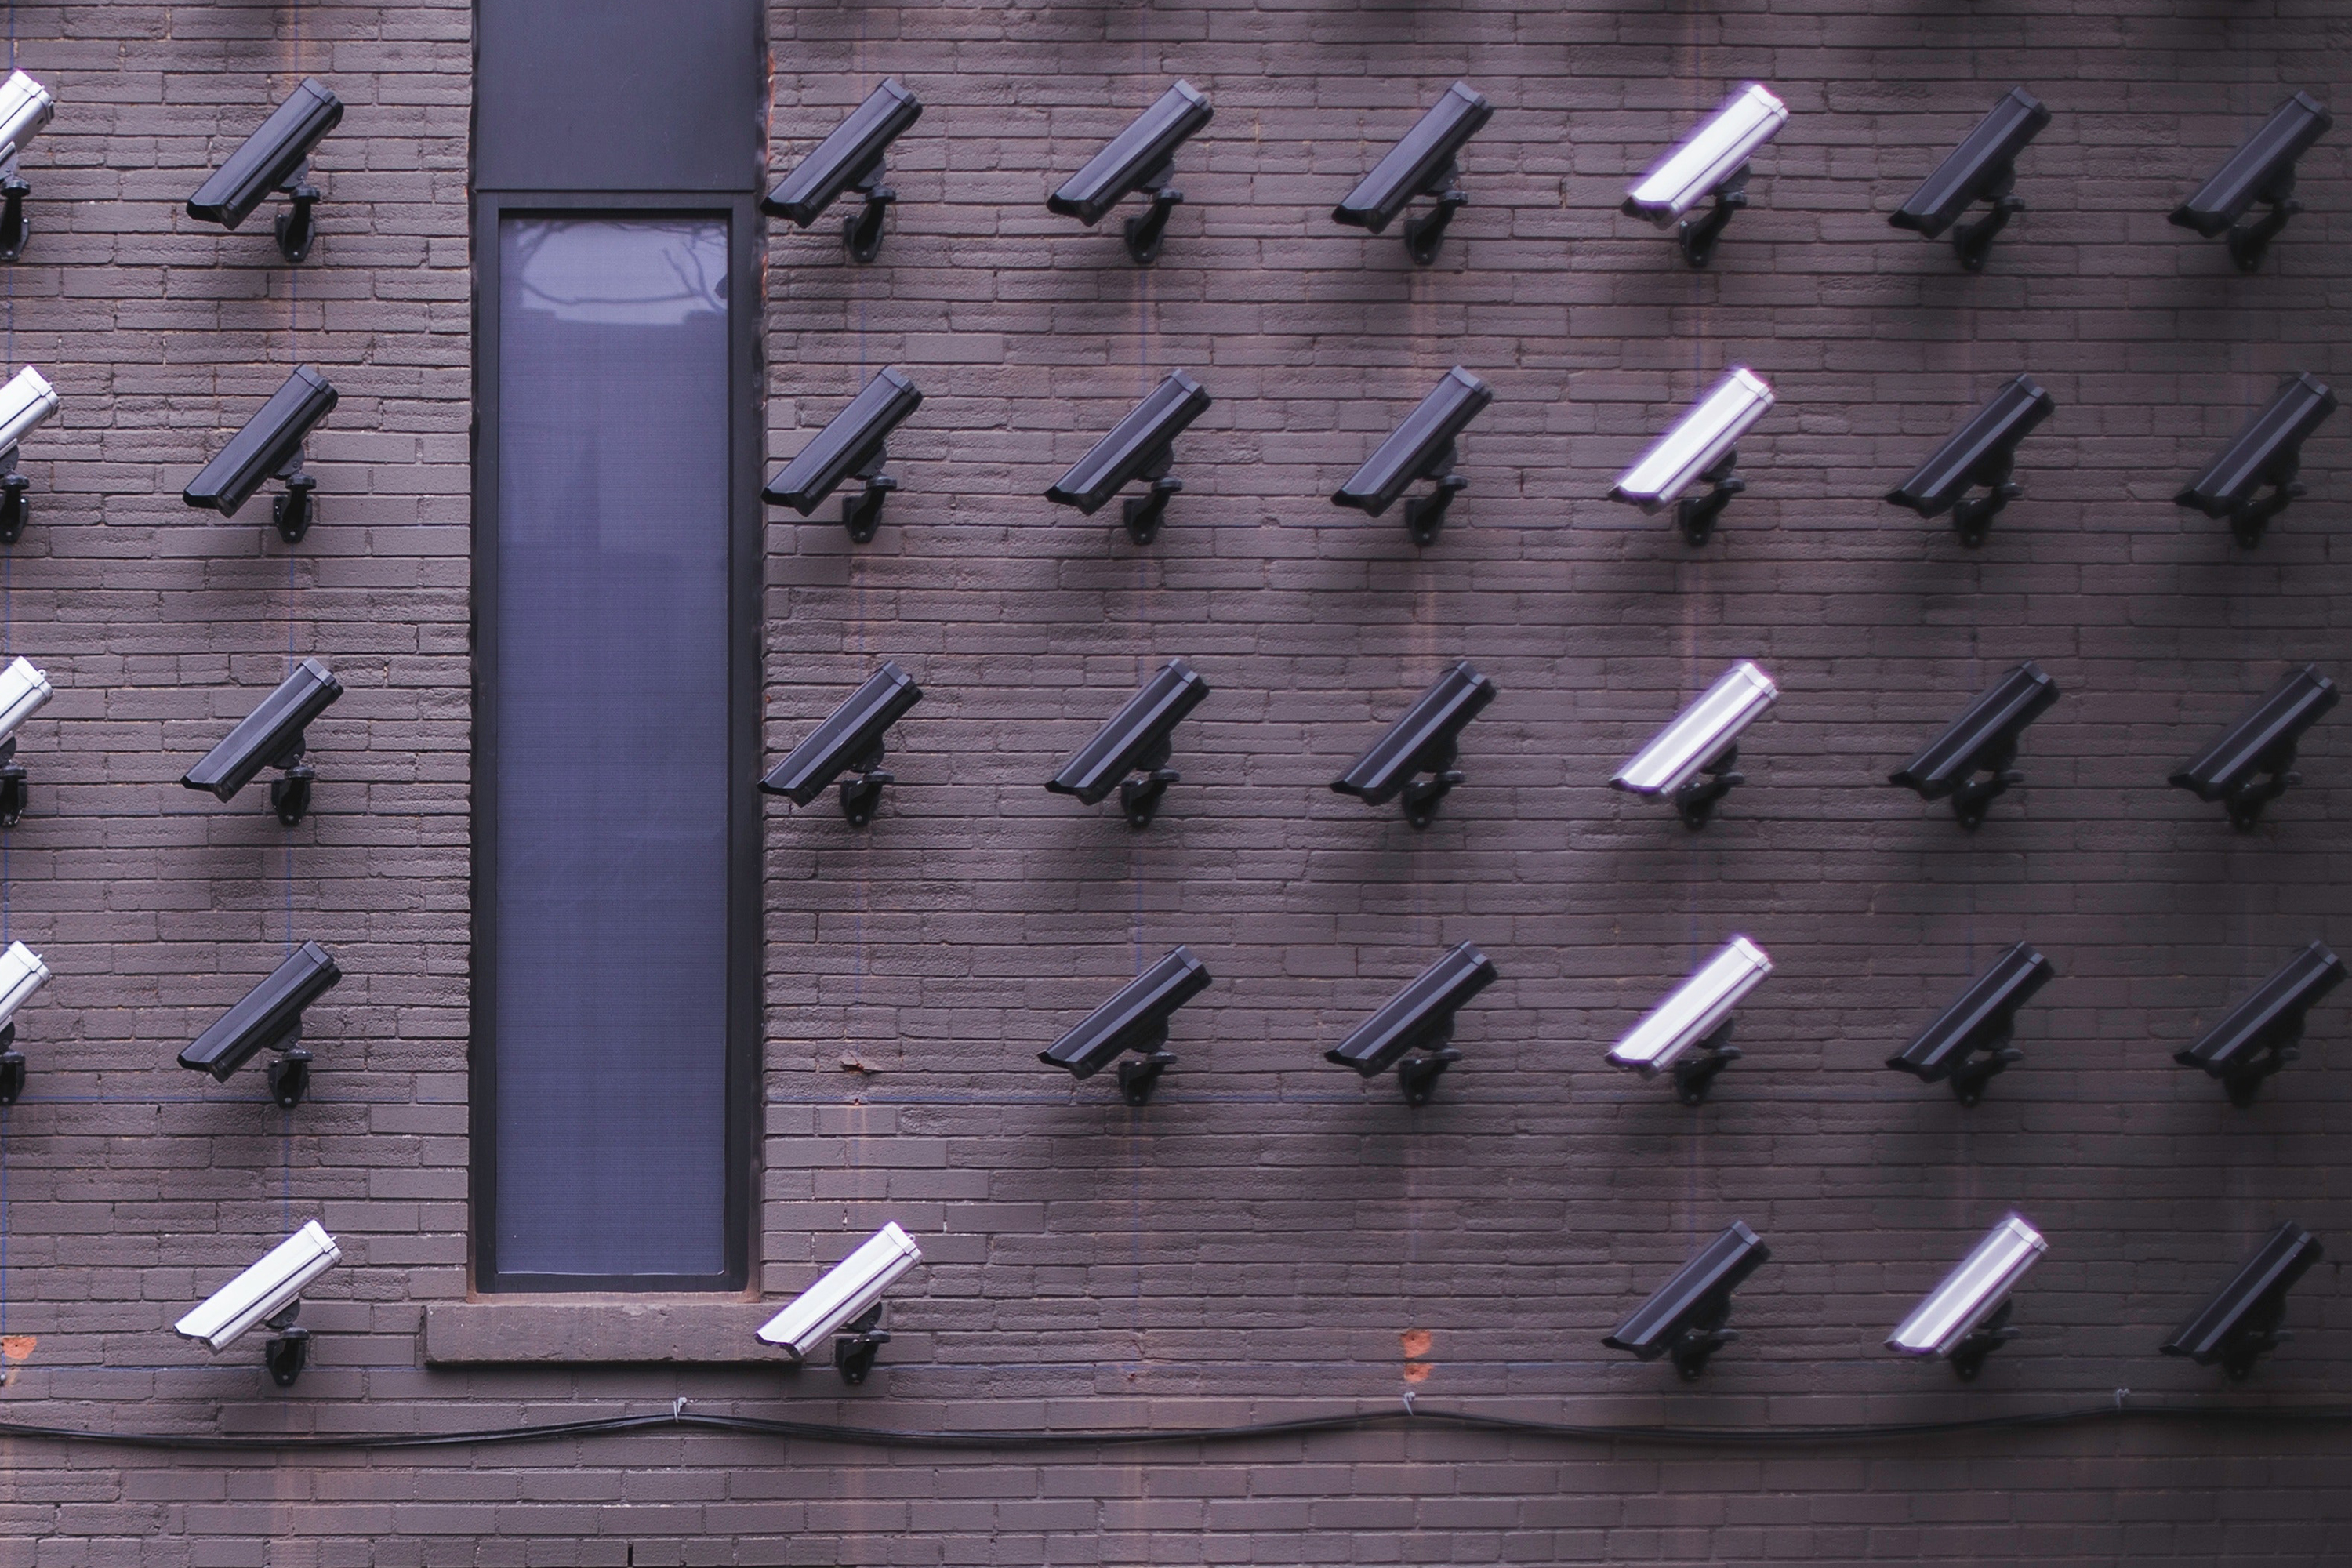 Security surveillance